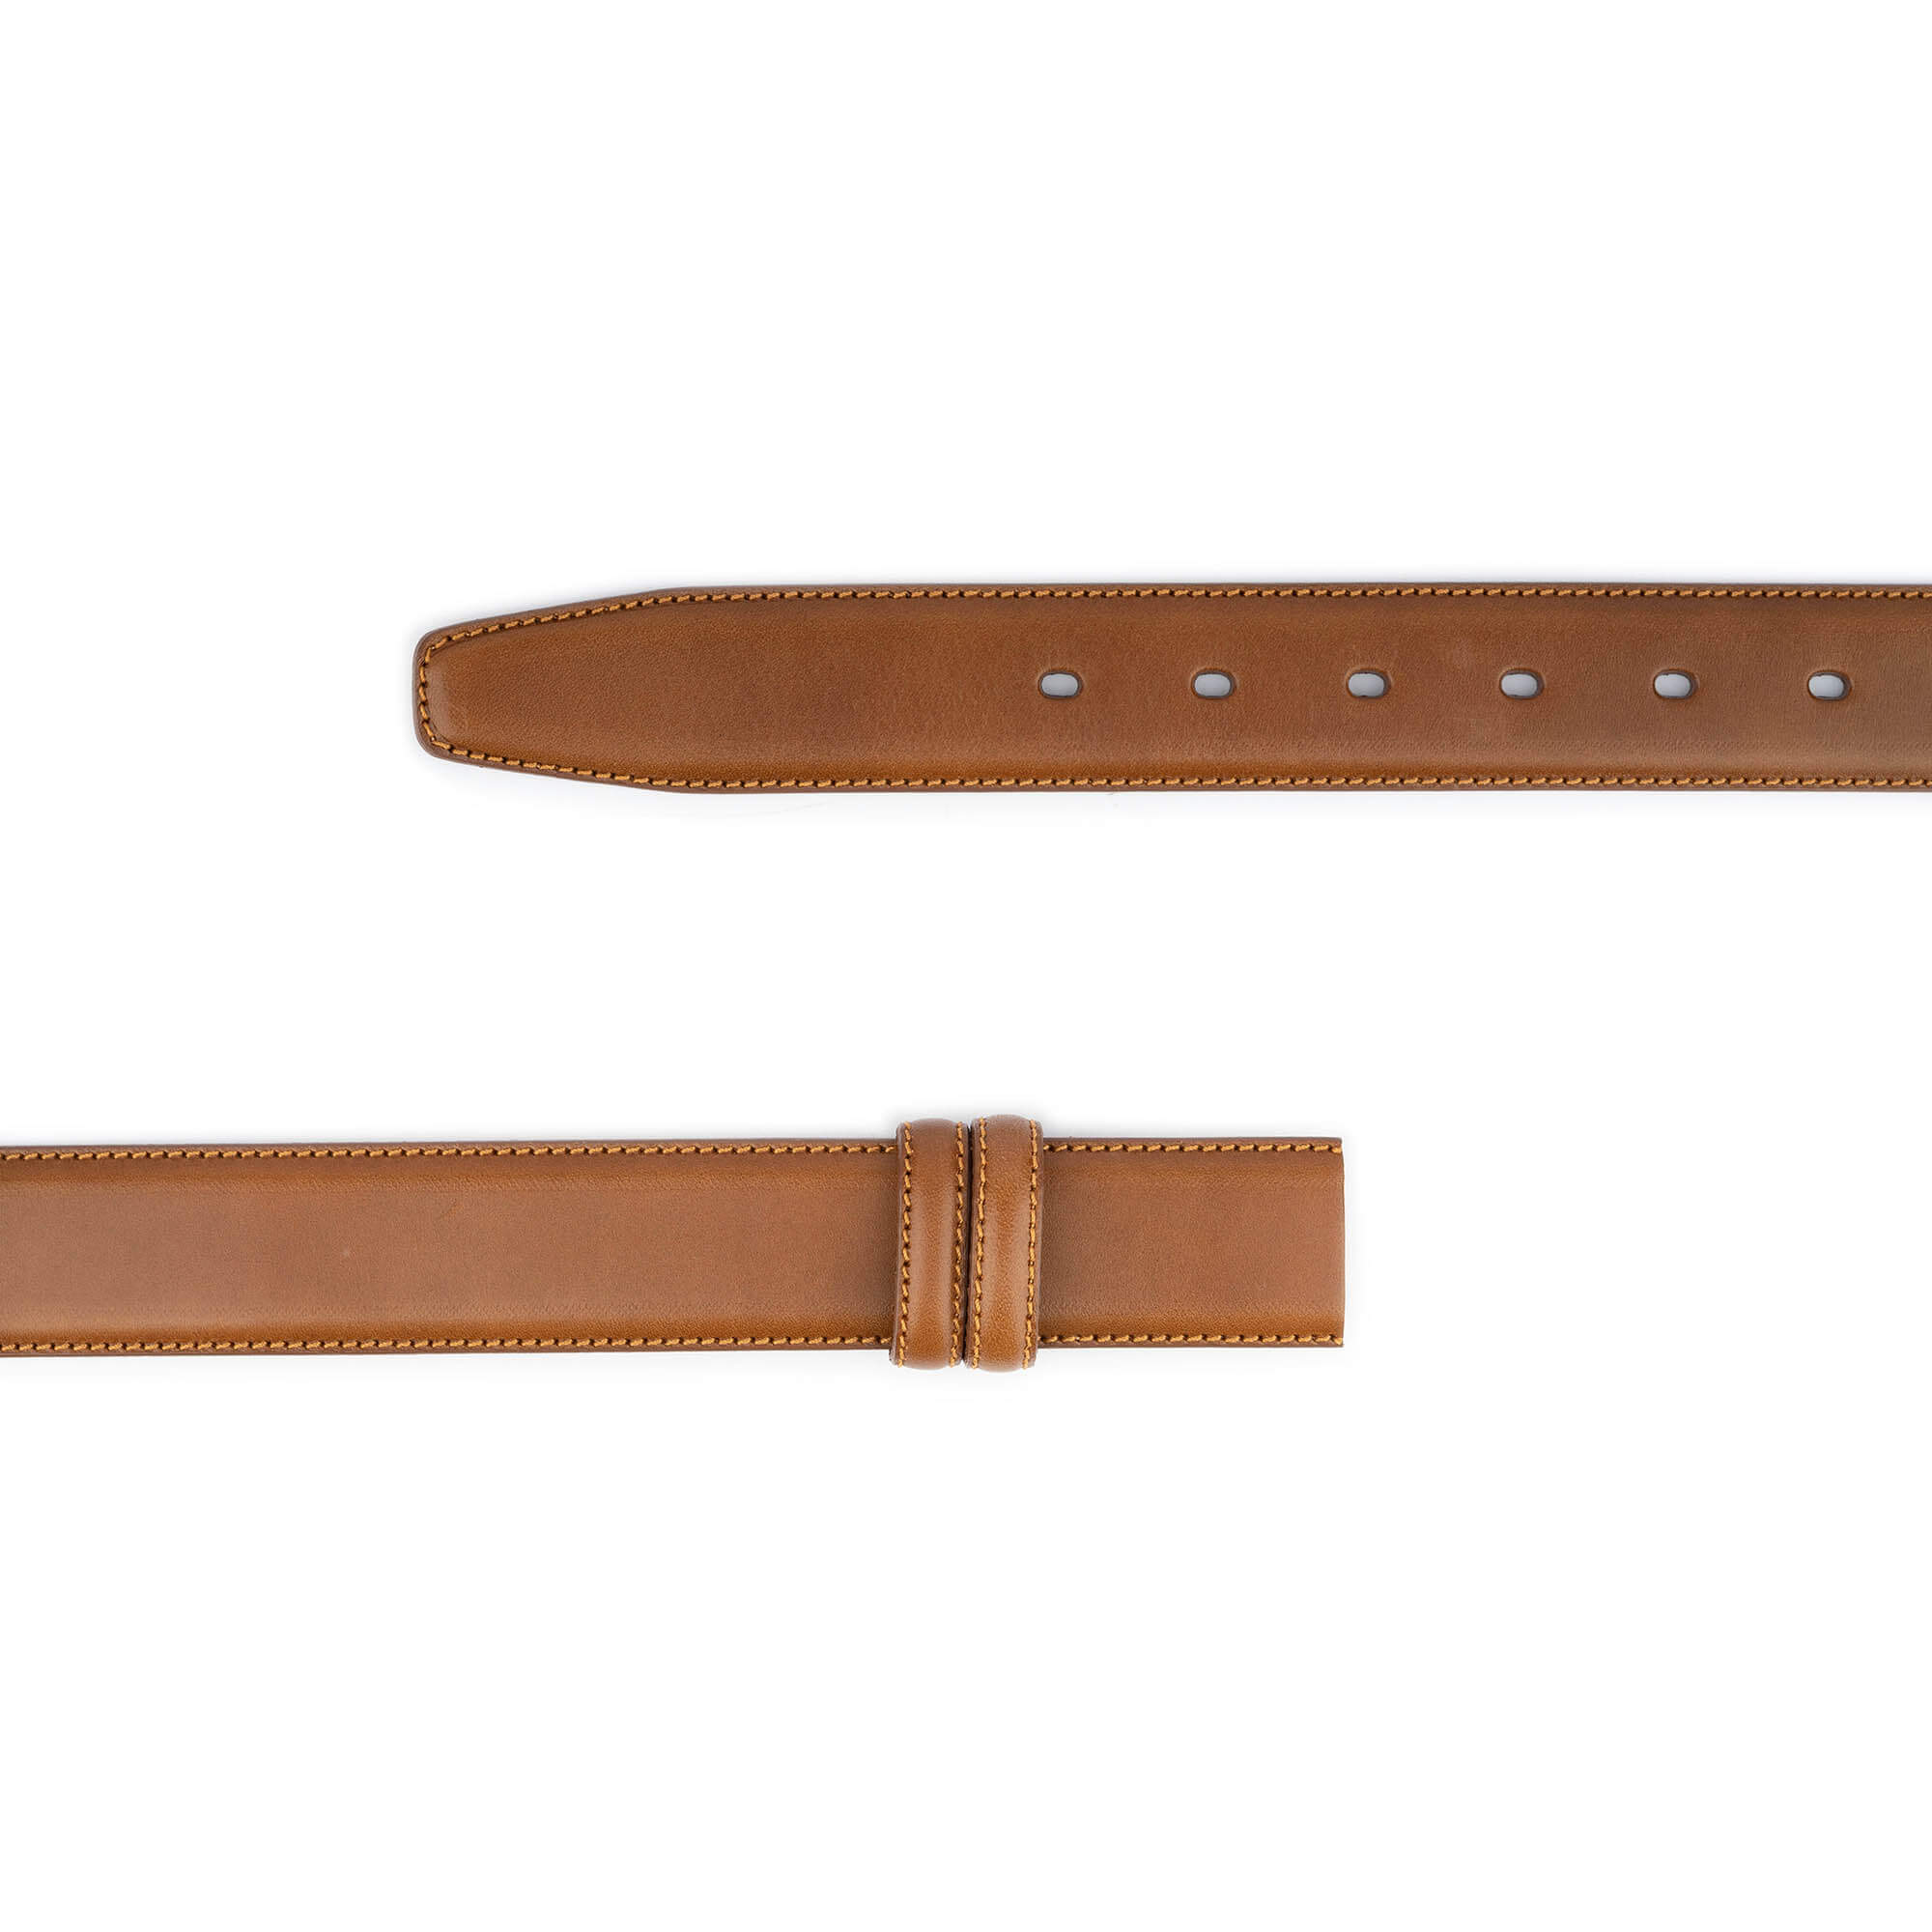 Buy Brown Mens Leather Strap For Belt Replacement - LeatherBeltsOnline.com